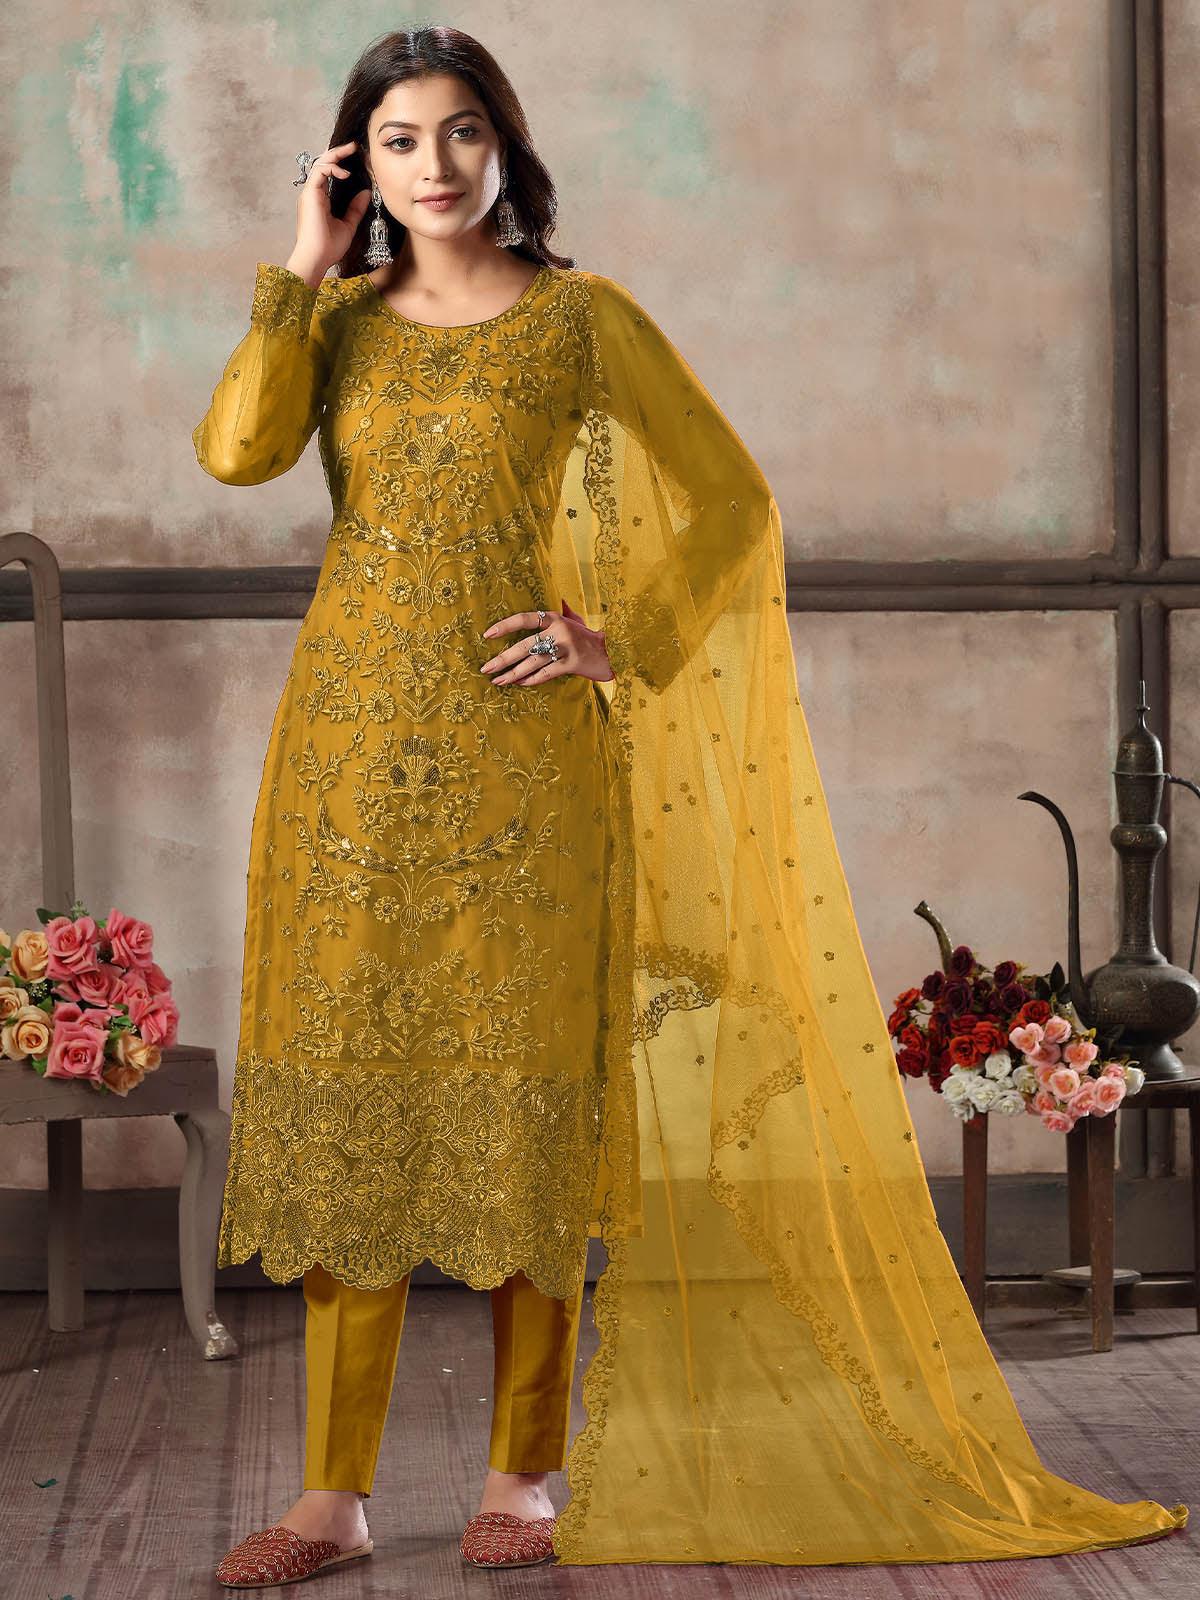 Lowest Price | $26 - $39 - Churidar Suits: Buy Latest Designer Churidar  Salwar Kameez Online